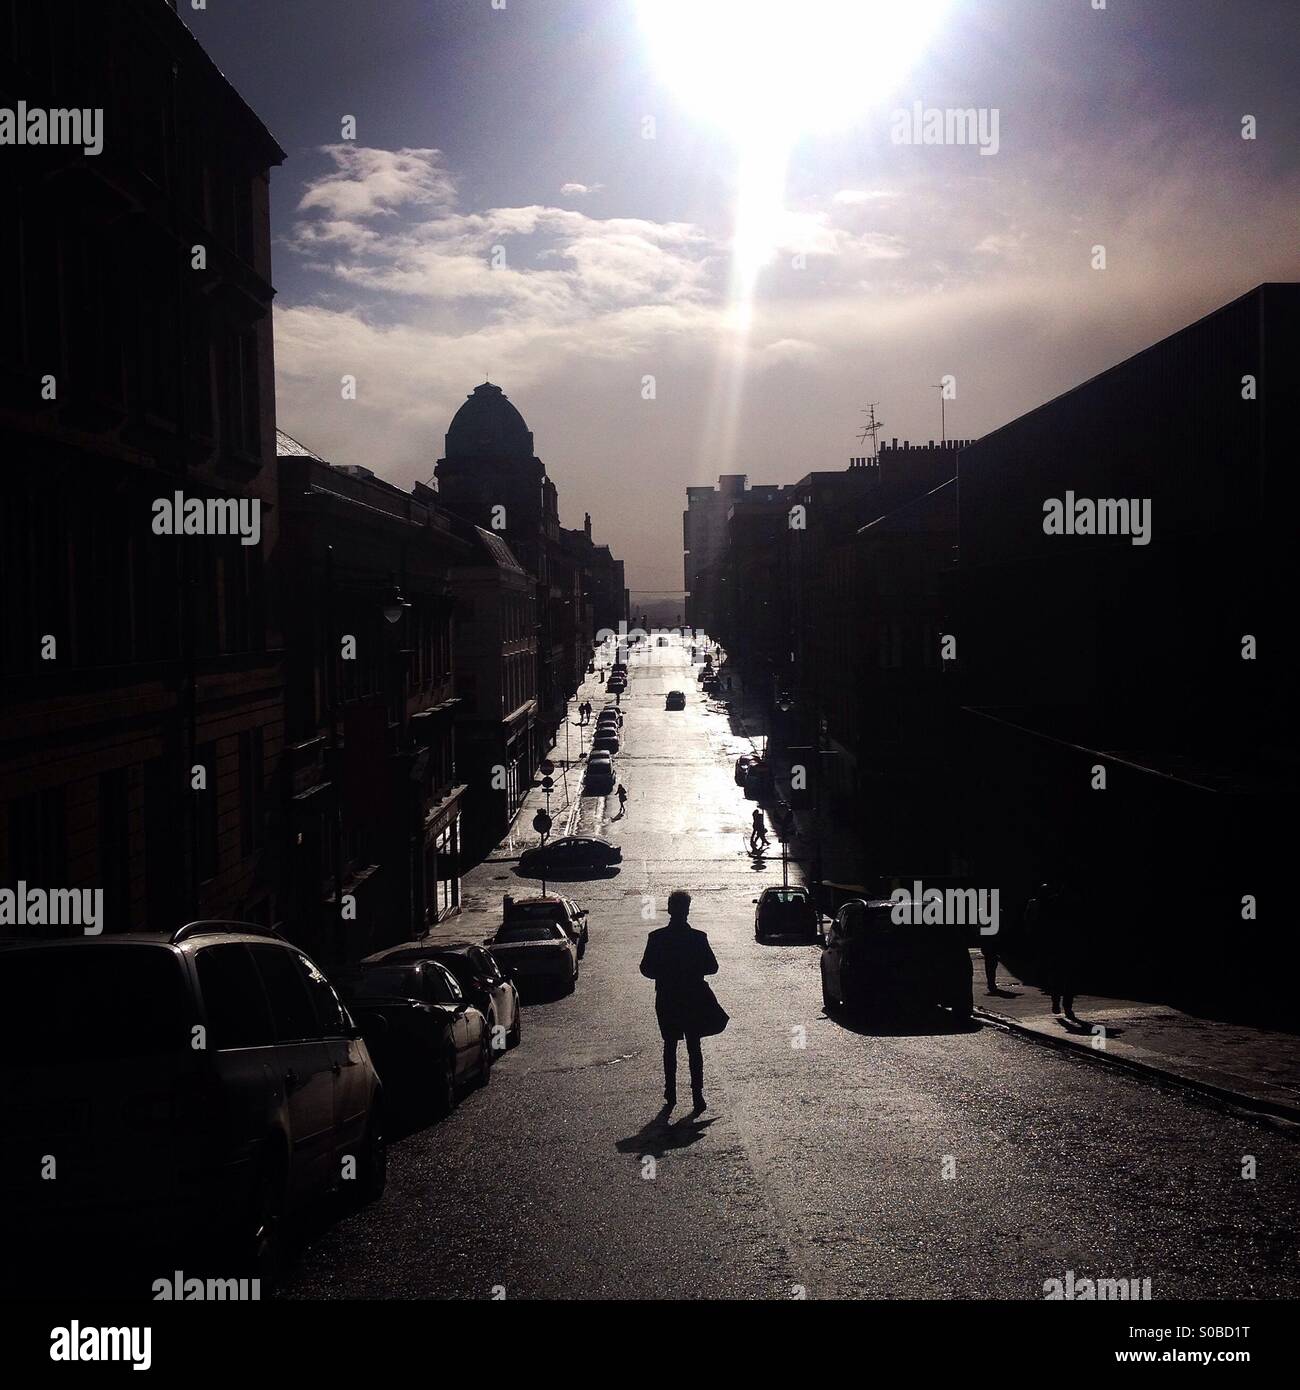 Man walking in sunlit street, Glasgow, Scotland Stock Photo